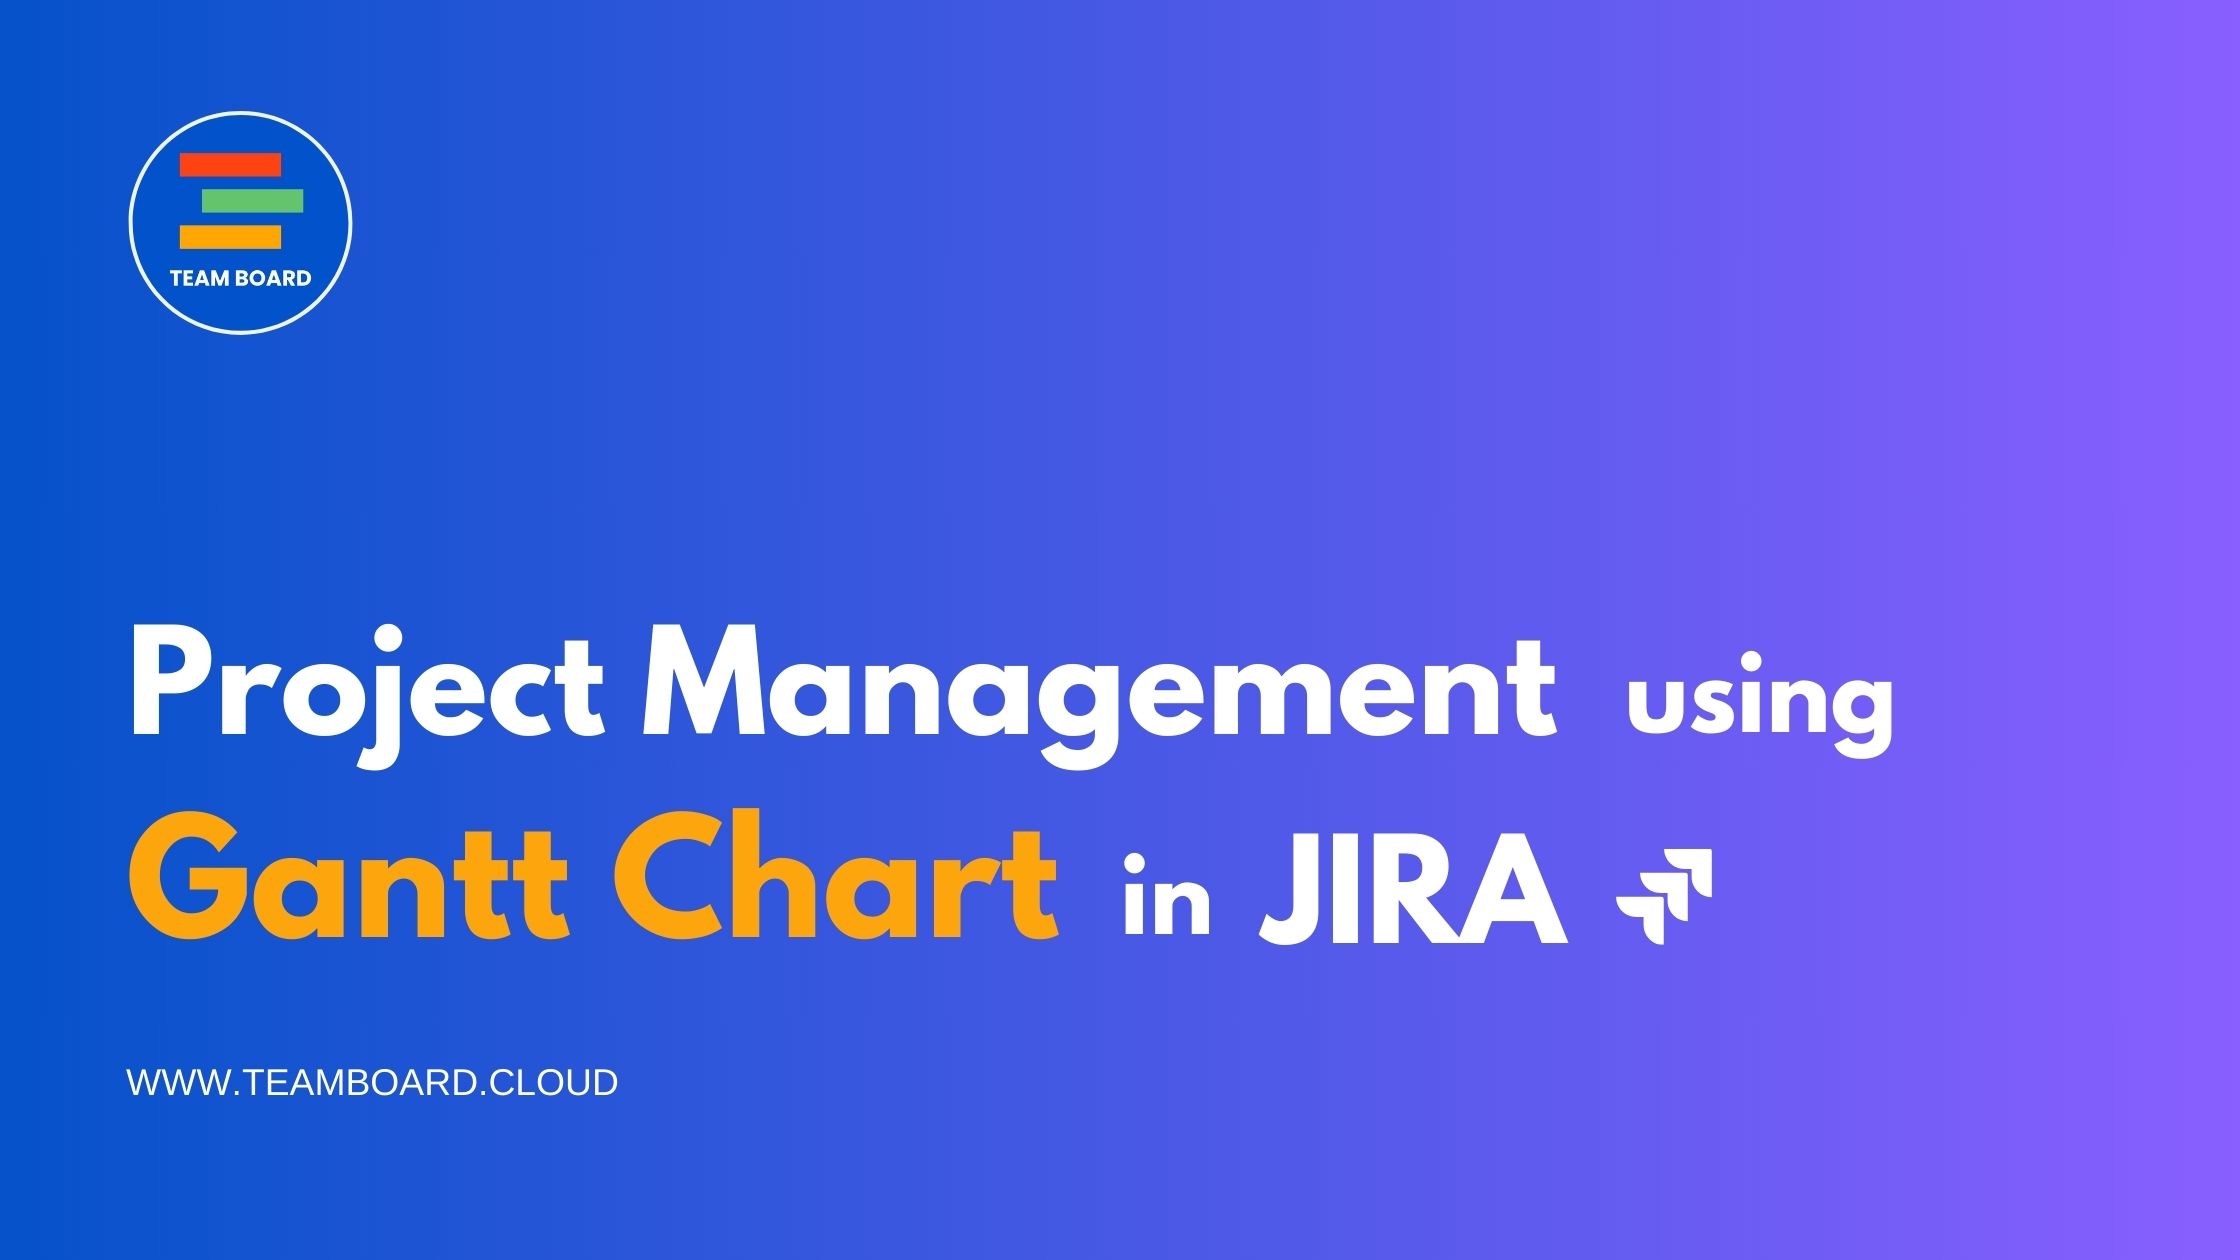 Project Management Using Gantt Charts in JIRA